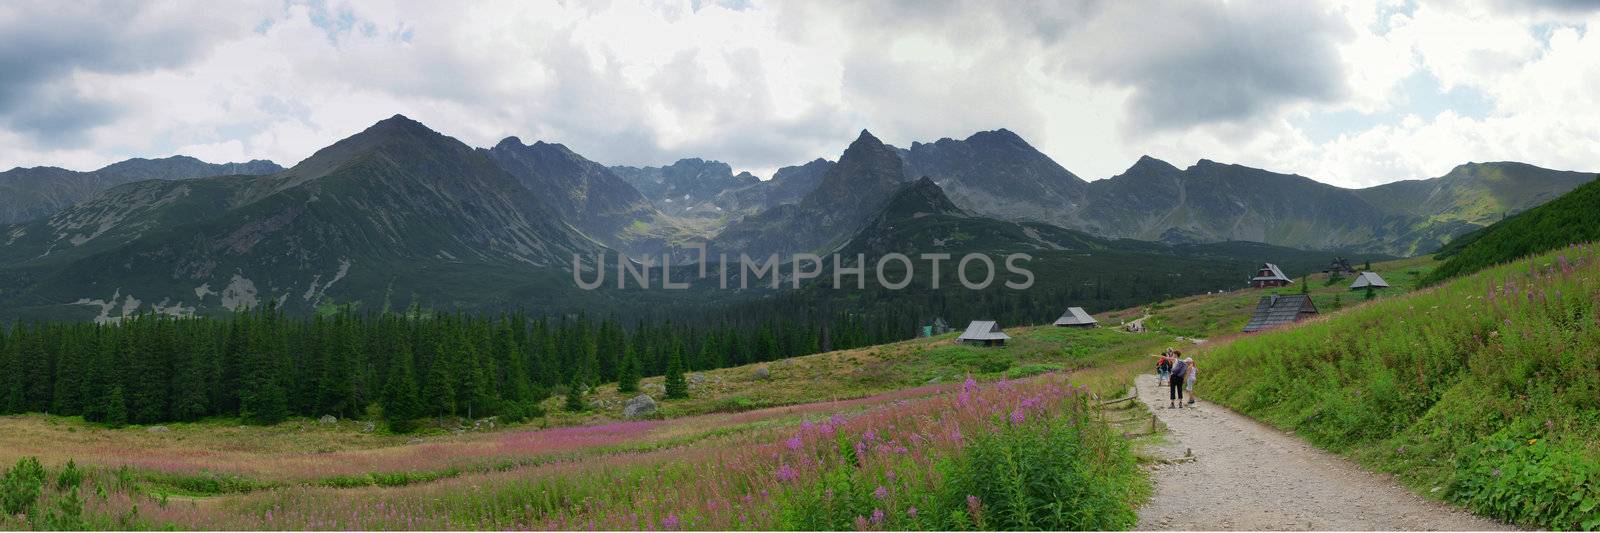 Panorama of the Tatras by pixelman